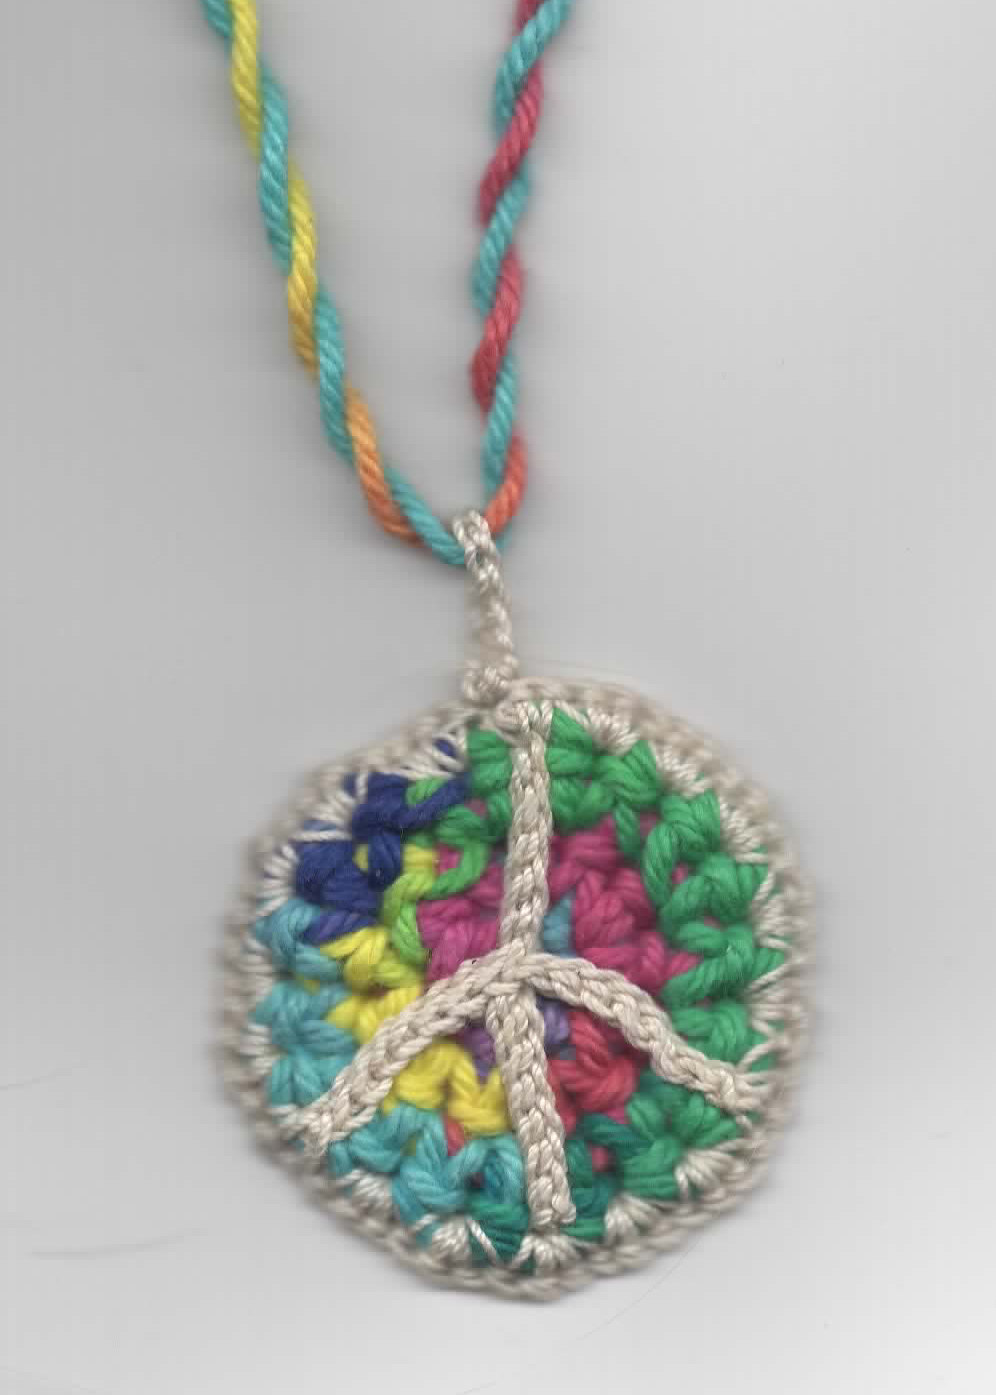 Crochet peace symbol pendant- with pattern!